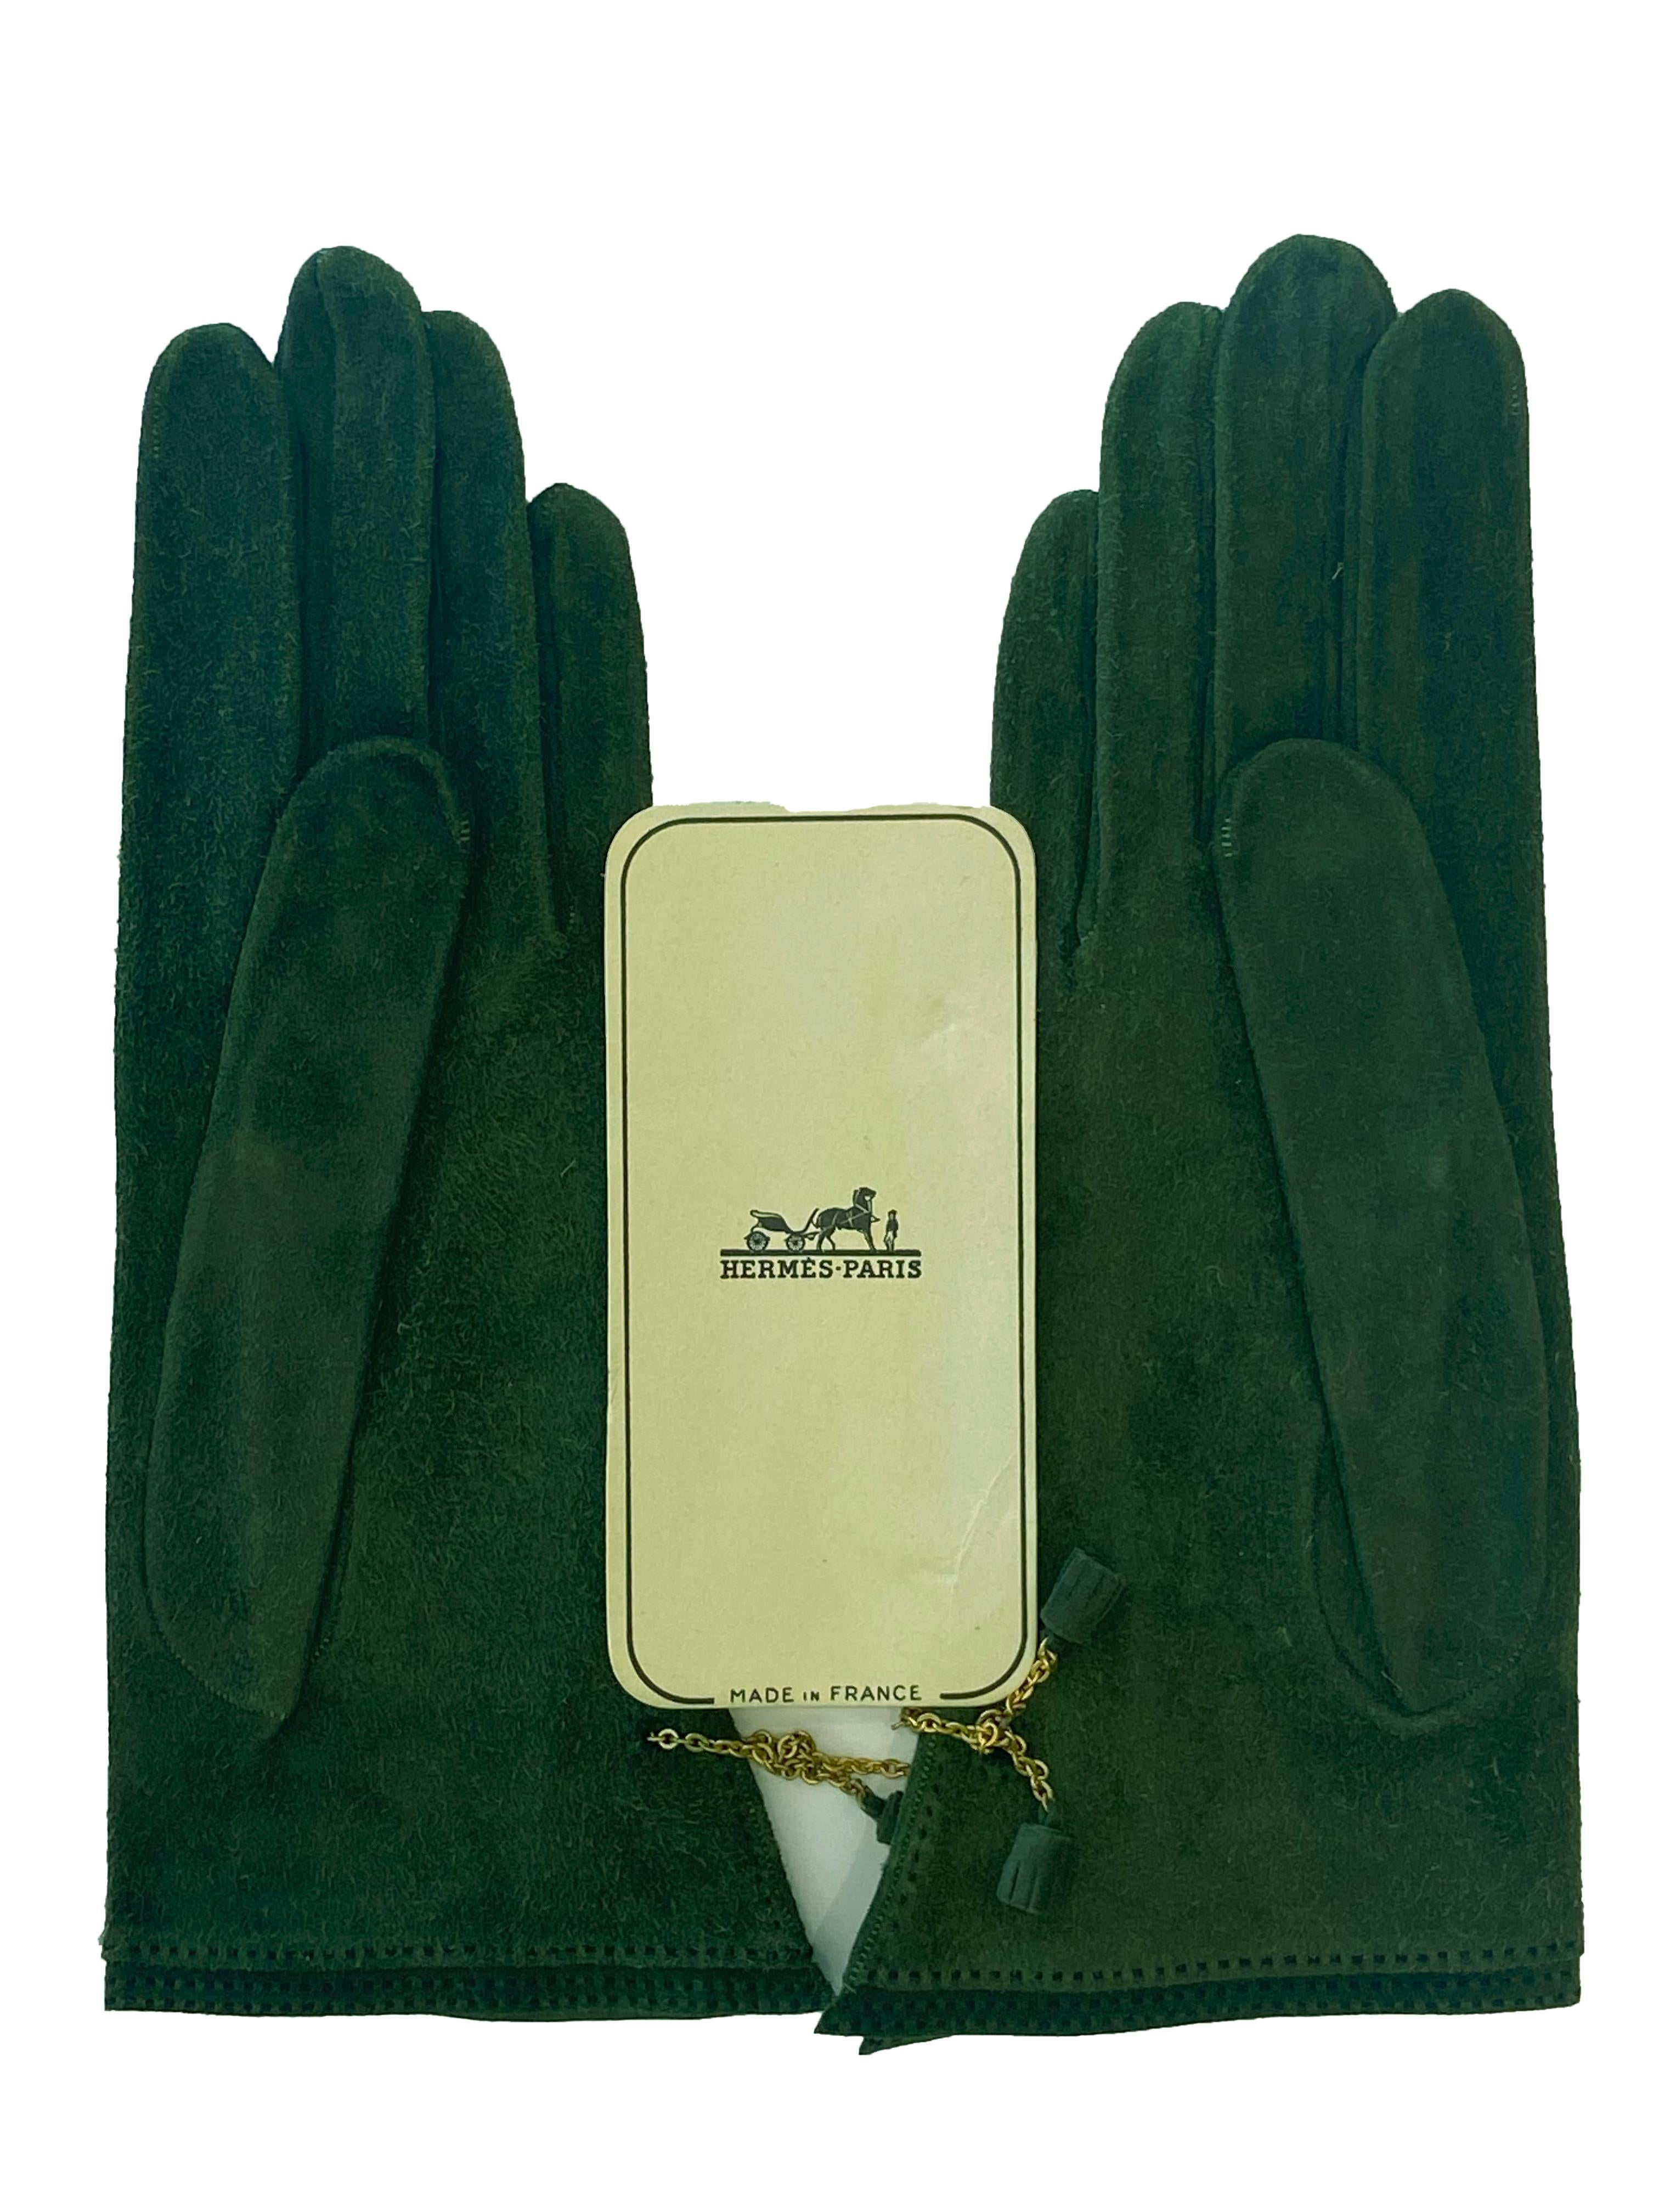 Hermes Forest Green Suede Gloves with Gold Chains & Tassels 7 1/2 Unworn 2